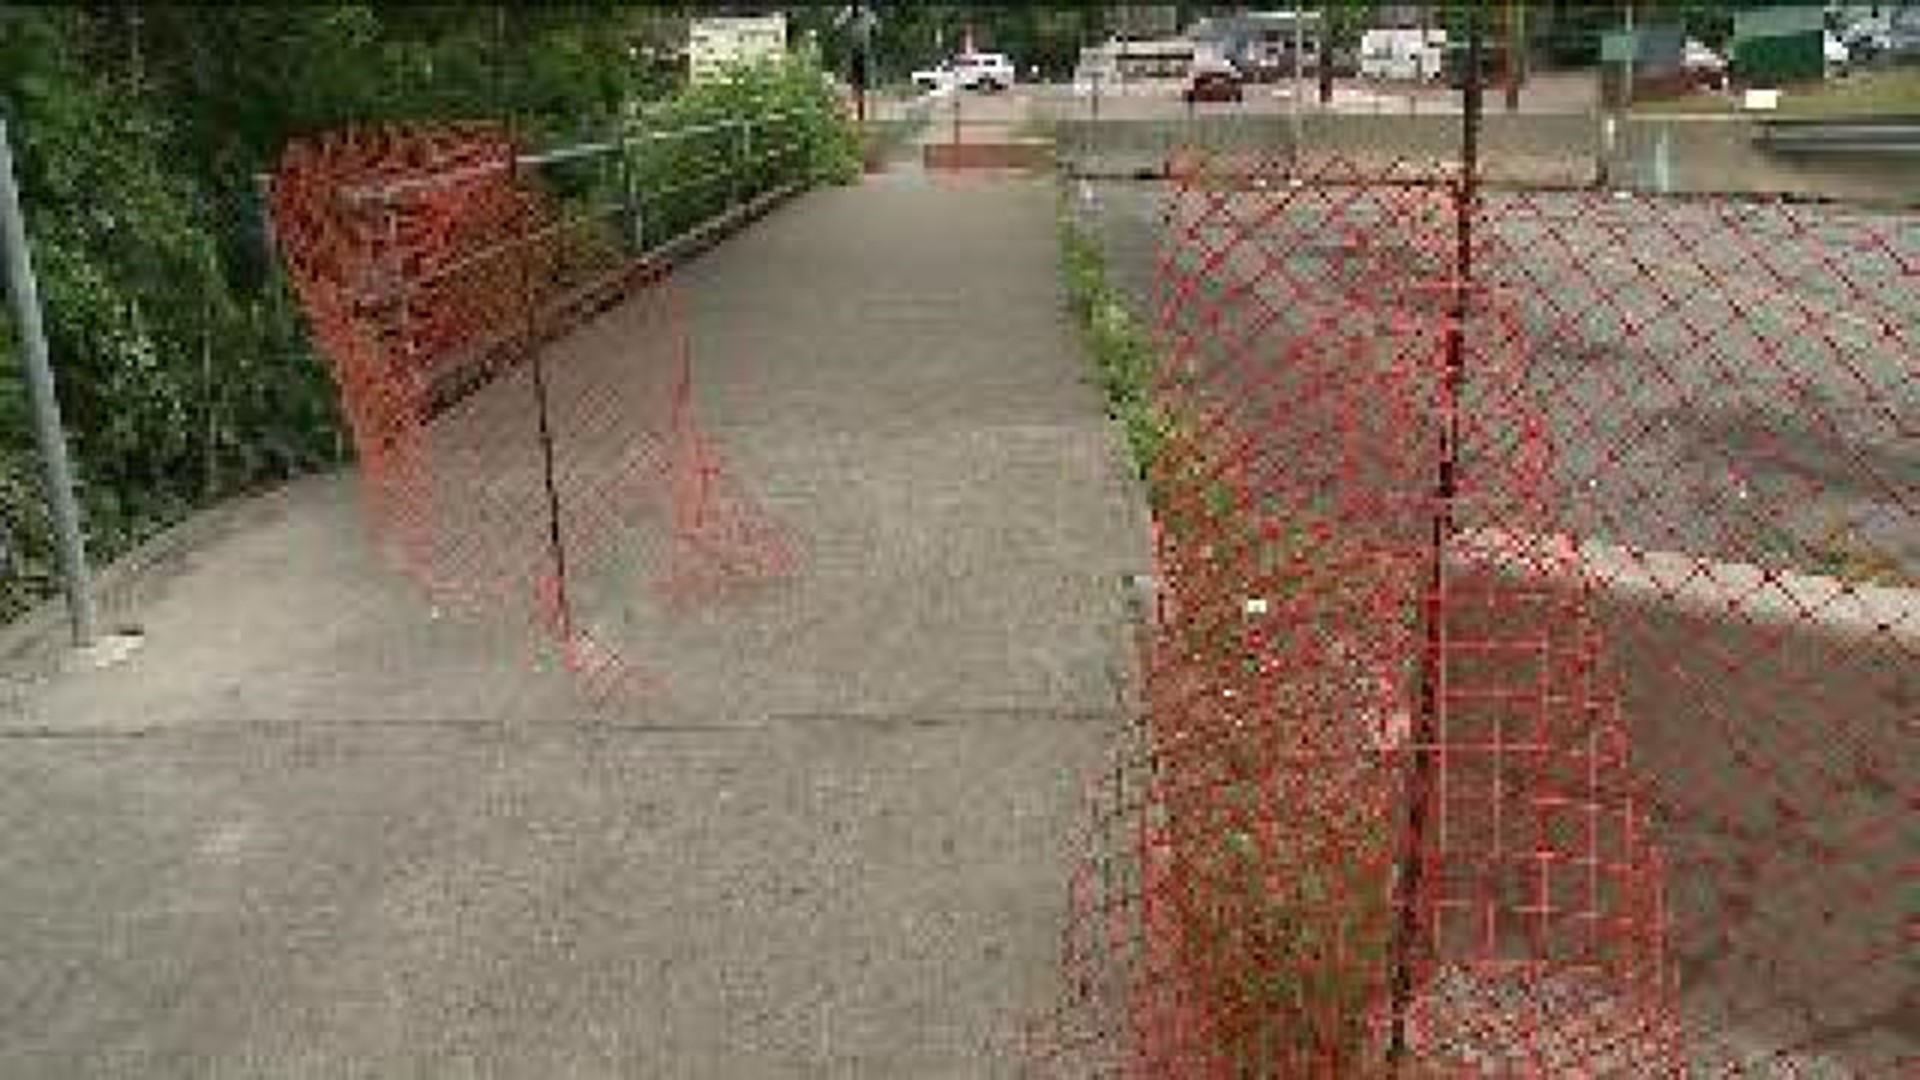 Safety Fence Cut, People Keep Crossing Crumbling Bridge